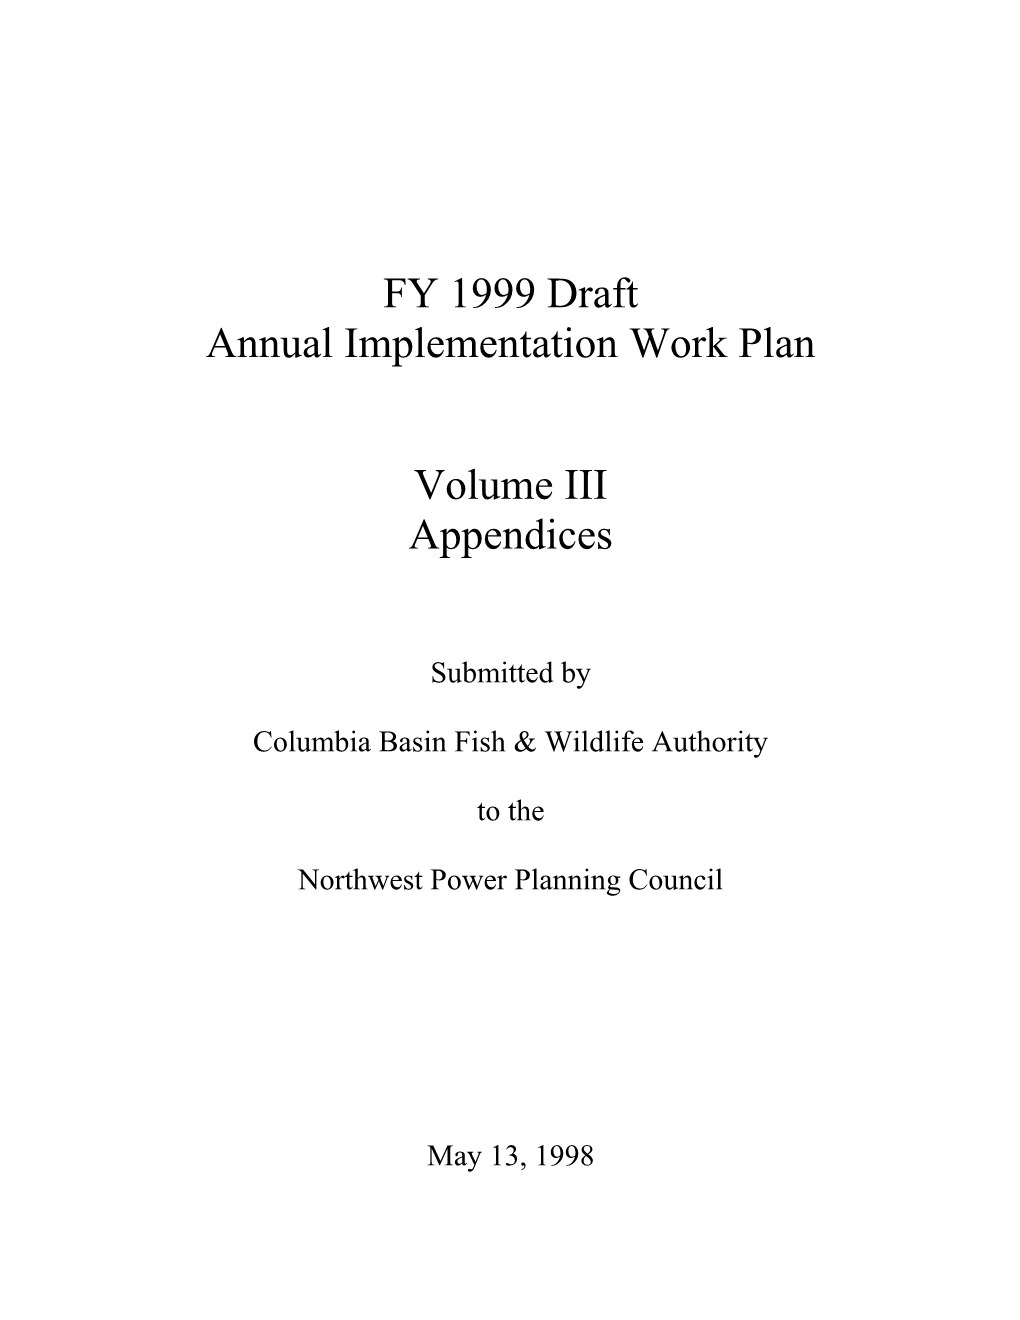 FY99 Annual Implementation Workplan Volume 3